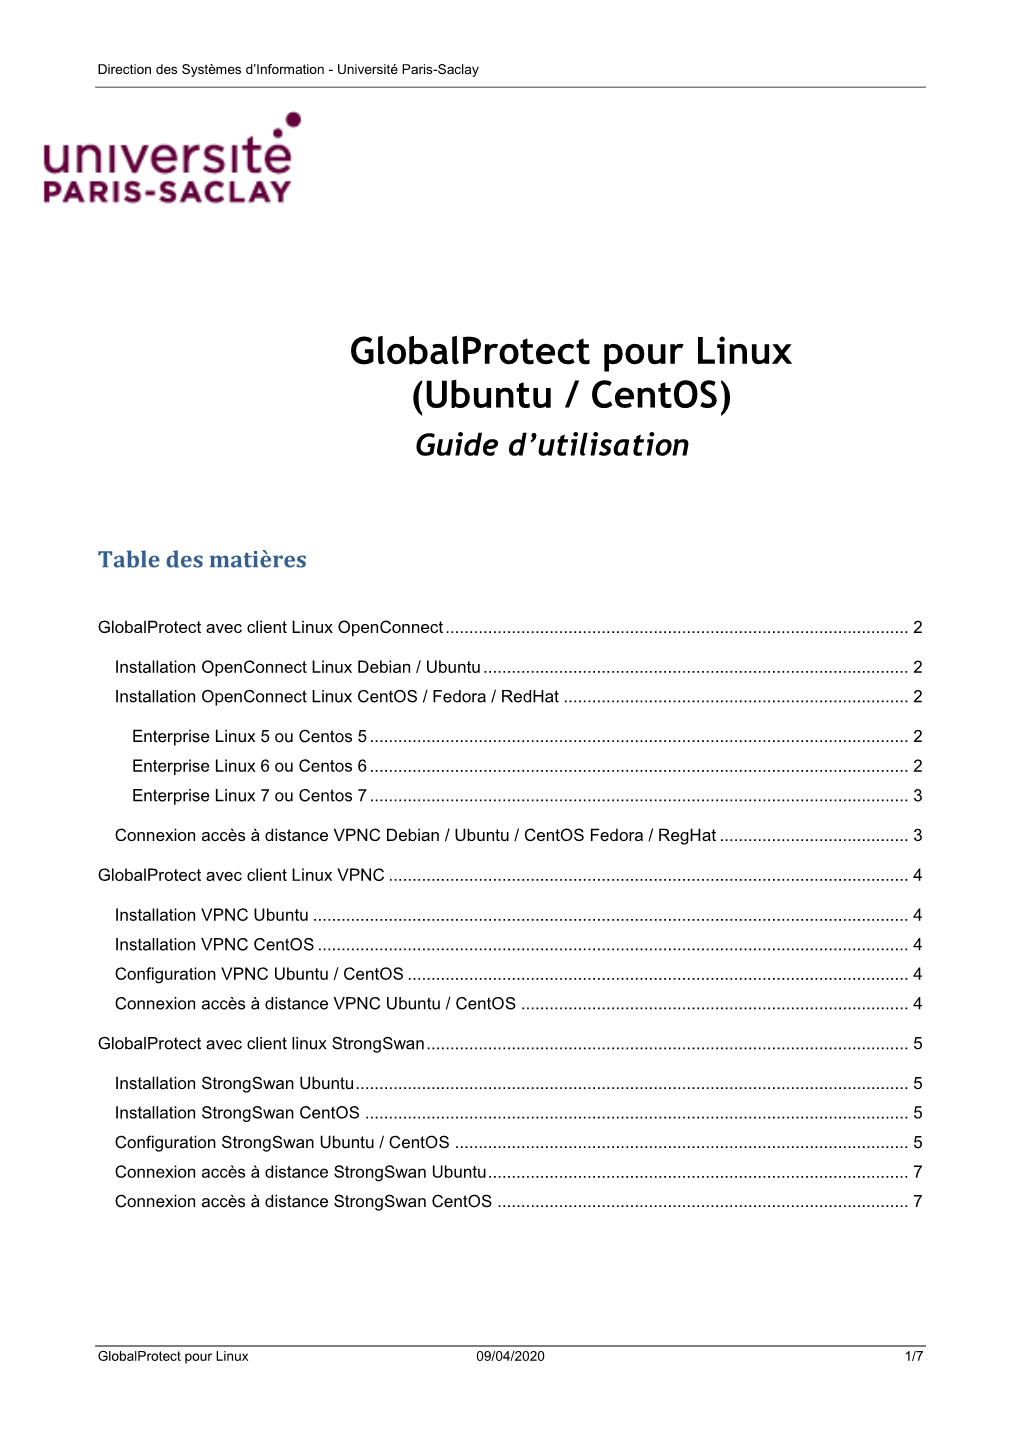 Ubuntu / Centos) Guide D’Utilisation